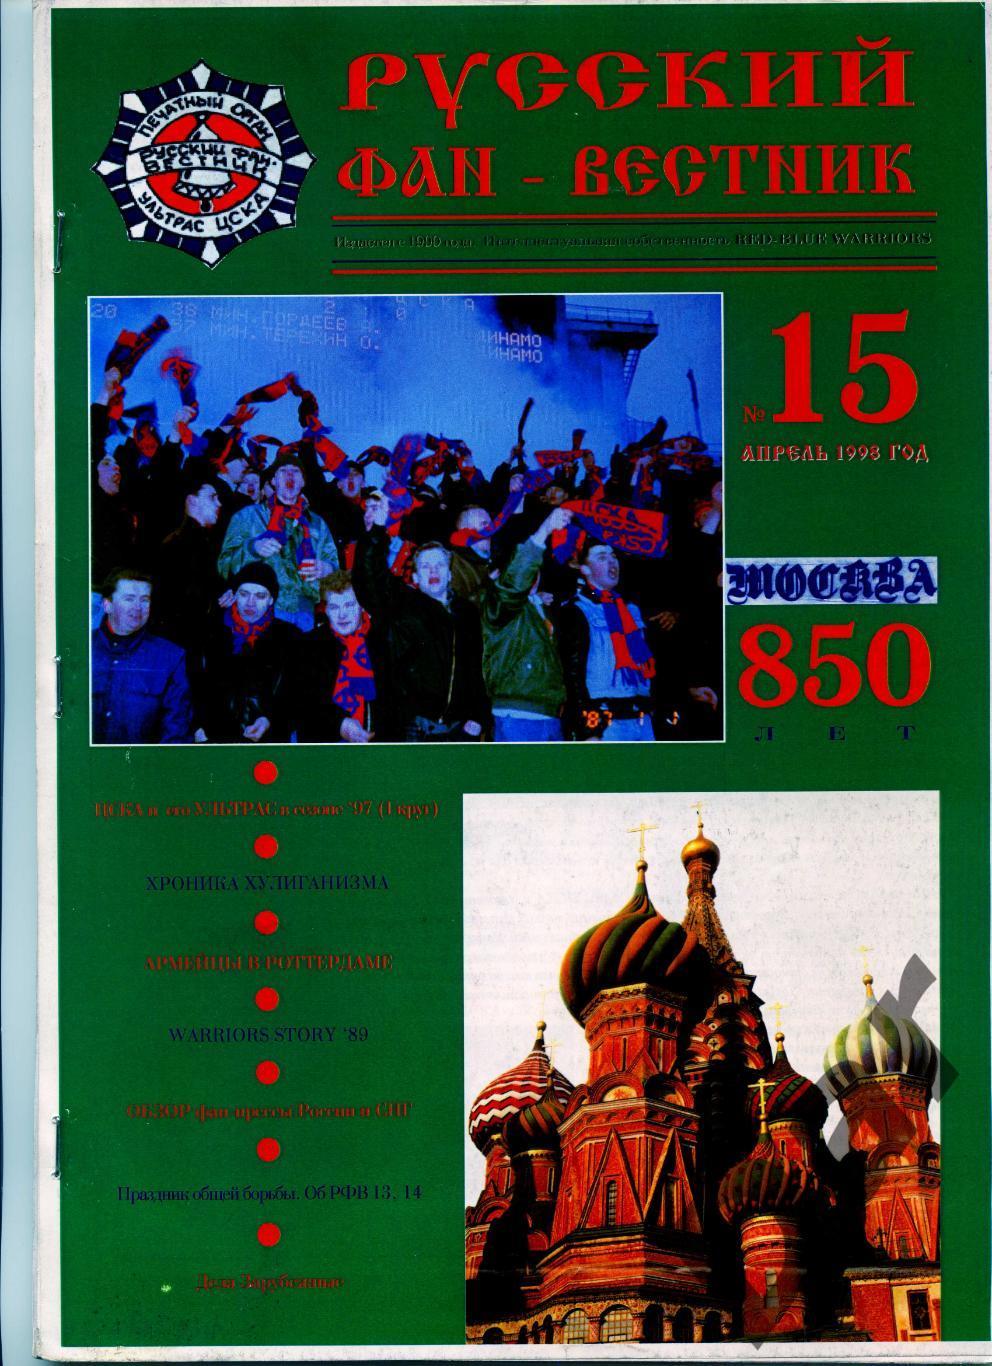 Фанзин Русский фан-вестник №15 (ЦСКА Москва)